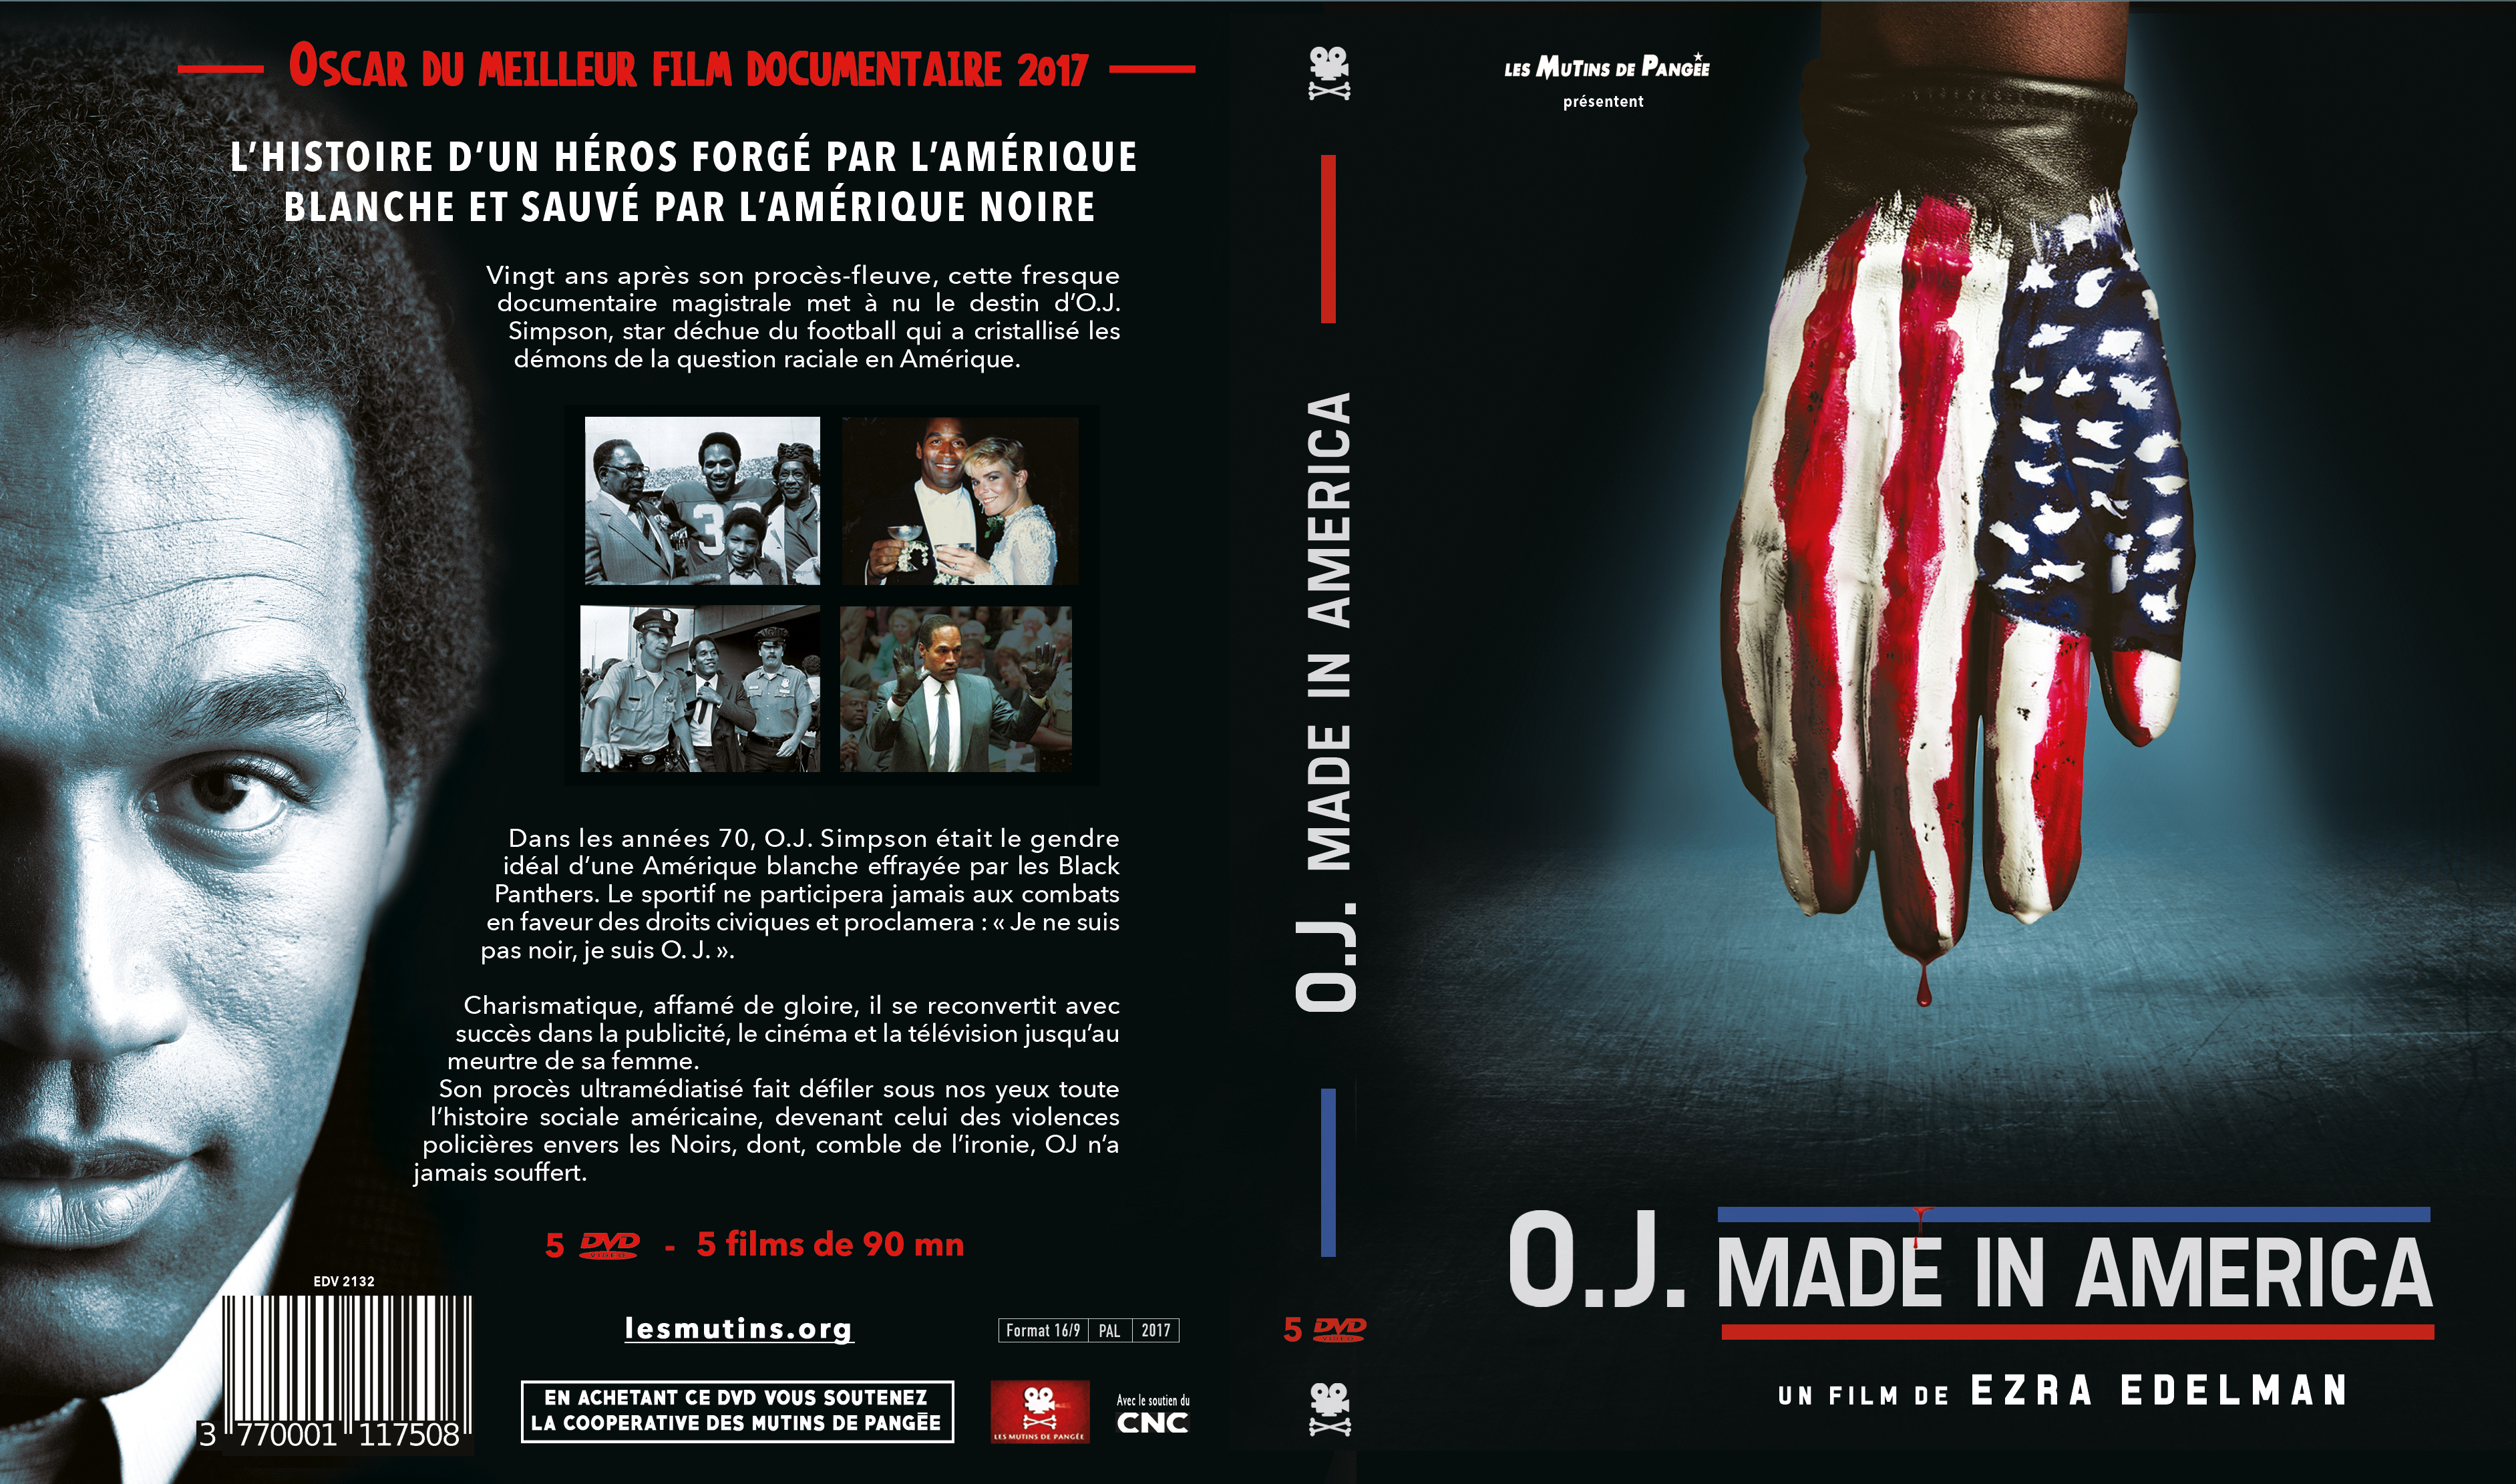 Jaquette DVD OJ made in America